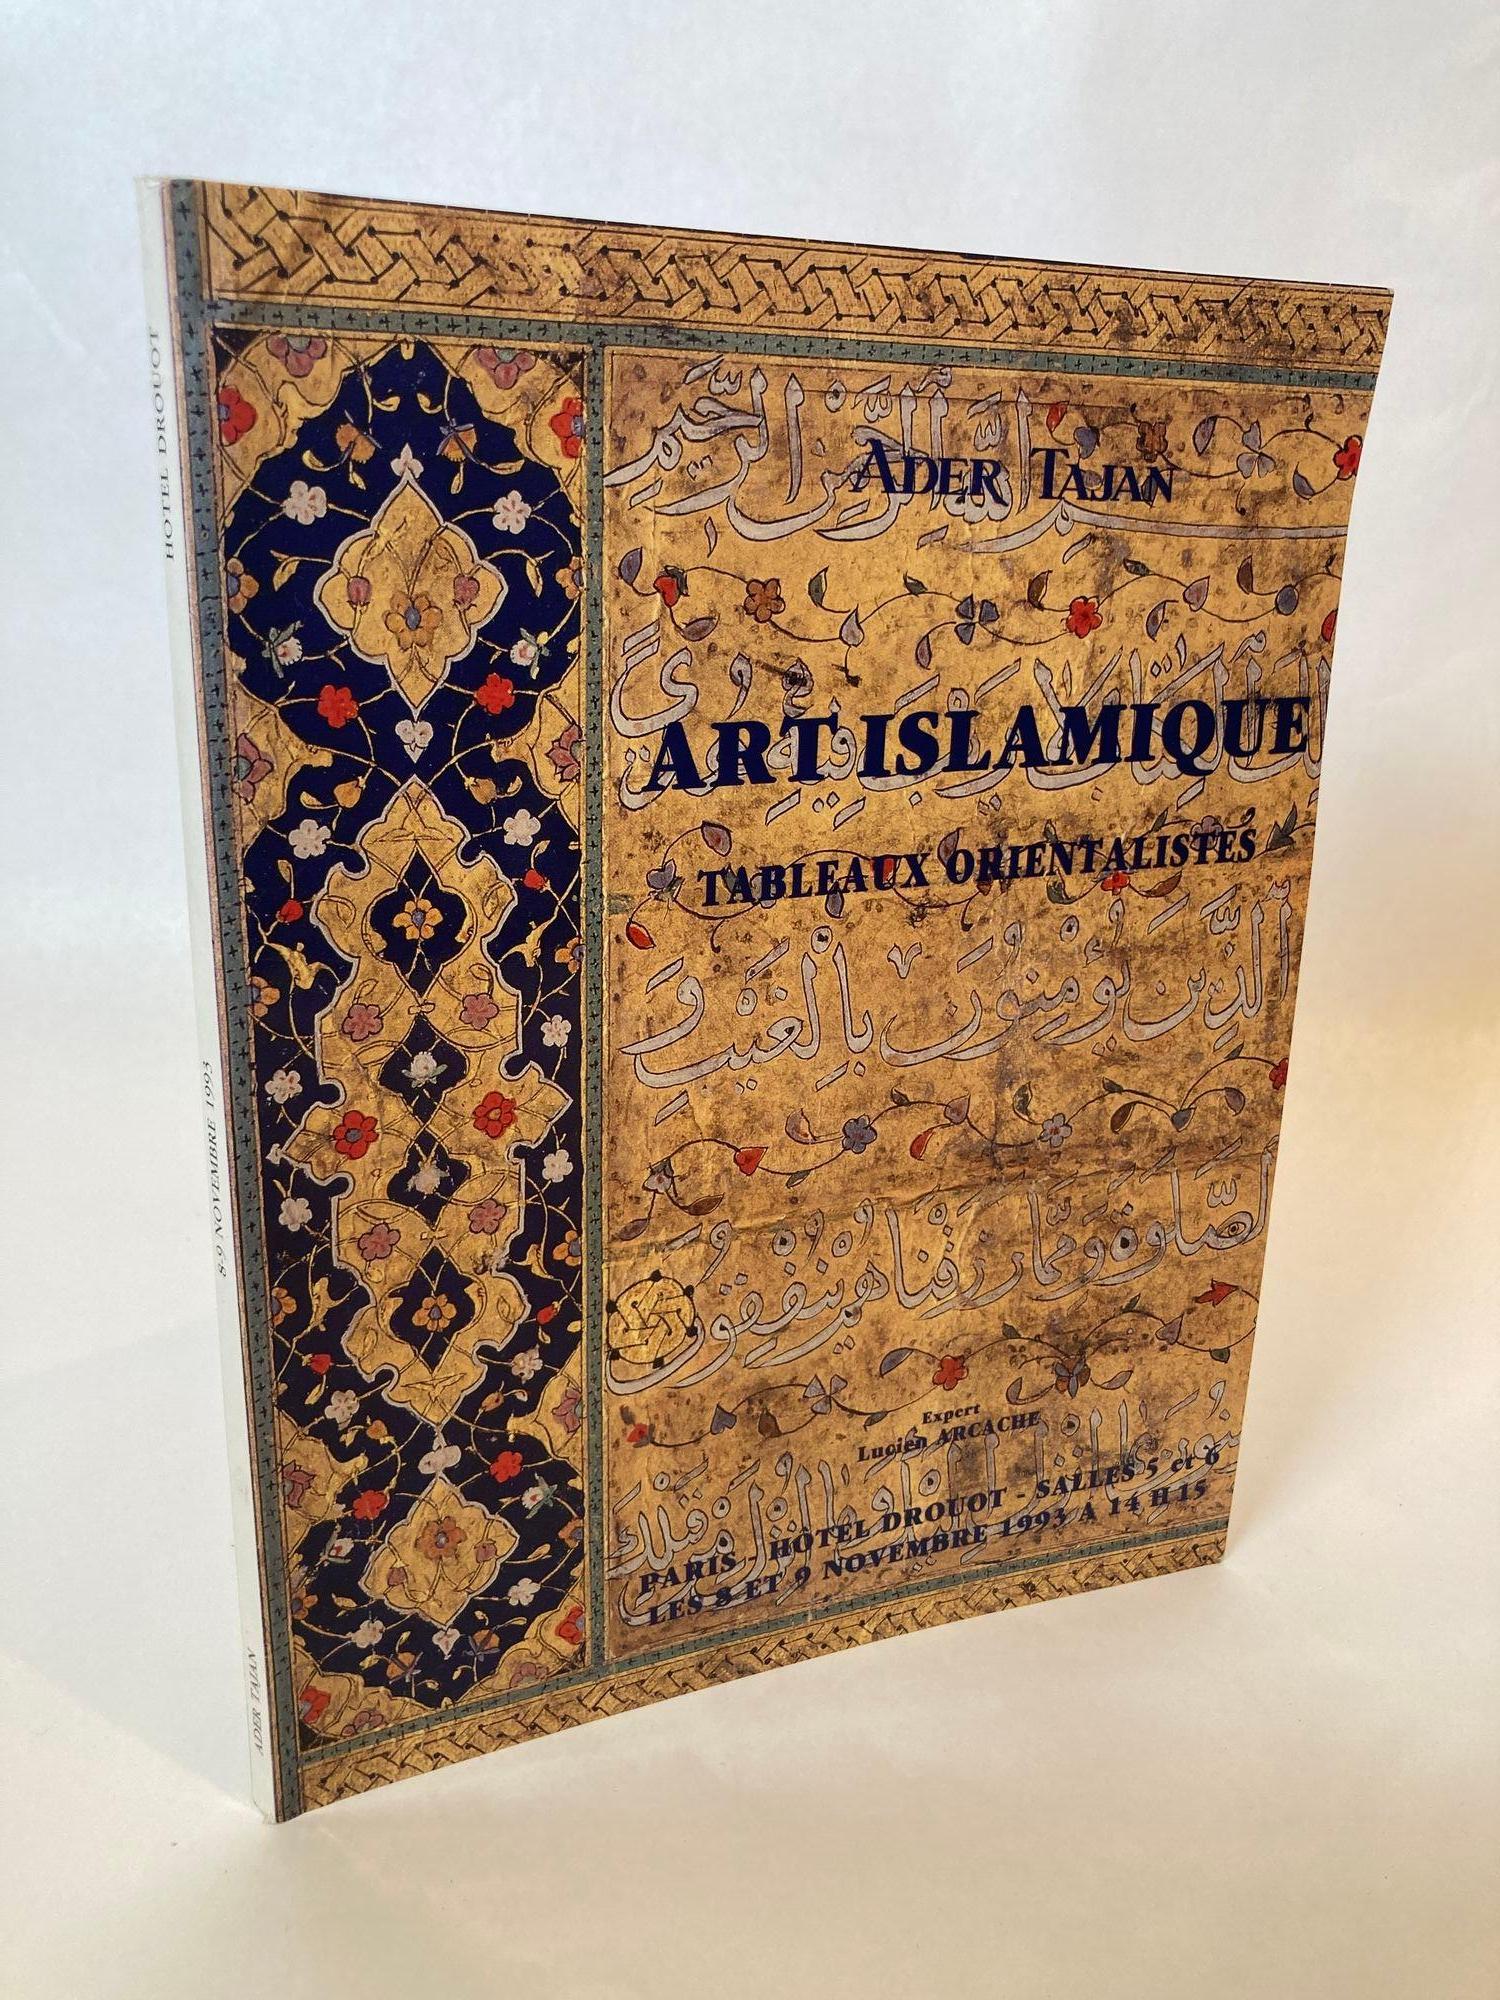 Tajan 1993 Islamic Art, Orientalist Paintings Auction Catalog Orientalist painting and Islamic Art, Text in French.
Paperback softcover Islamic Art book.
Author: A. Tajan.
Dimensions: 8